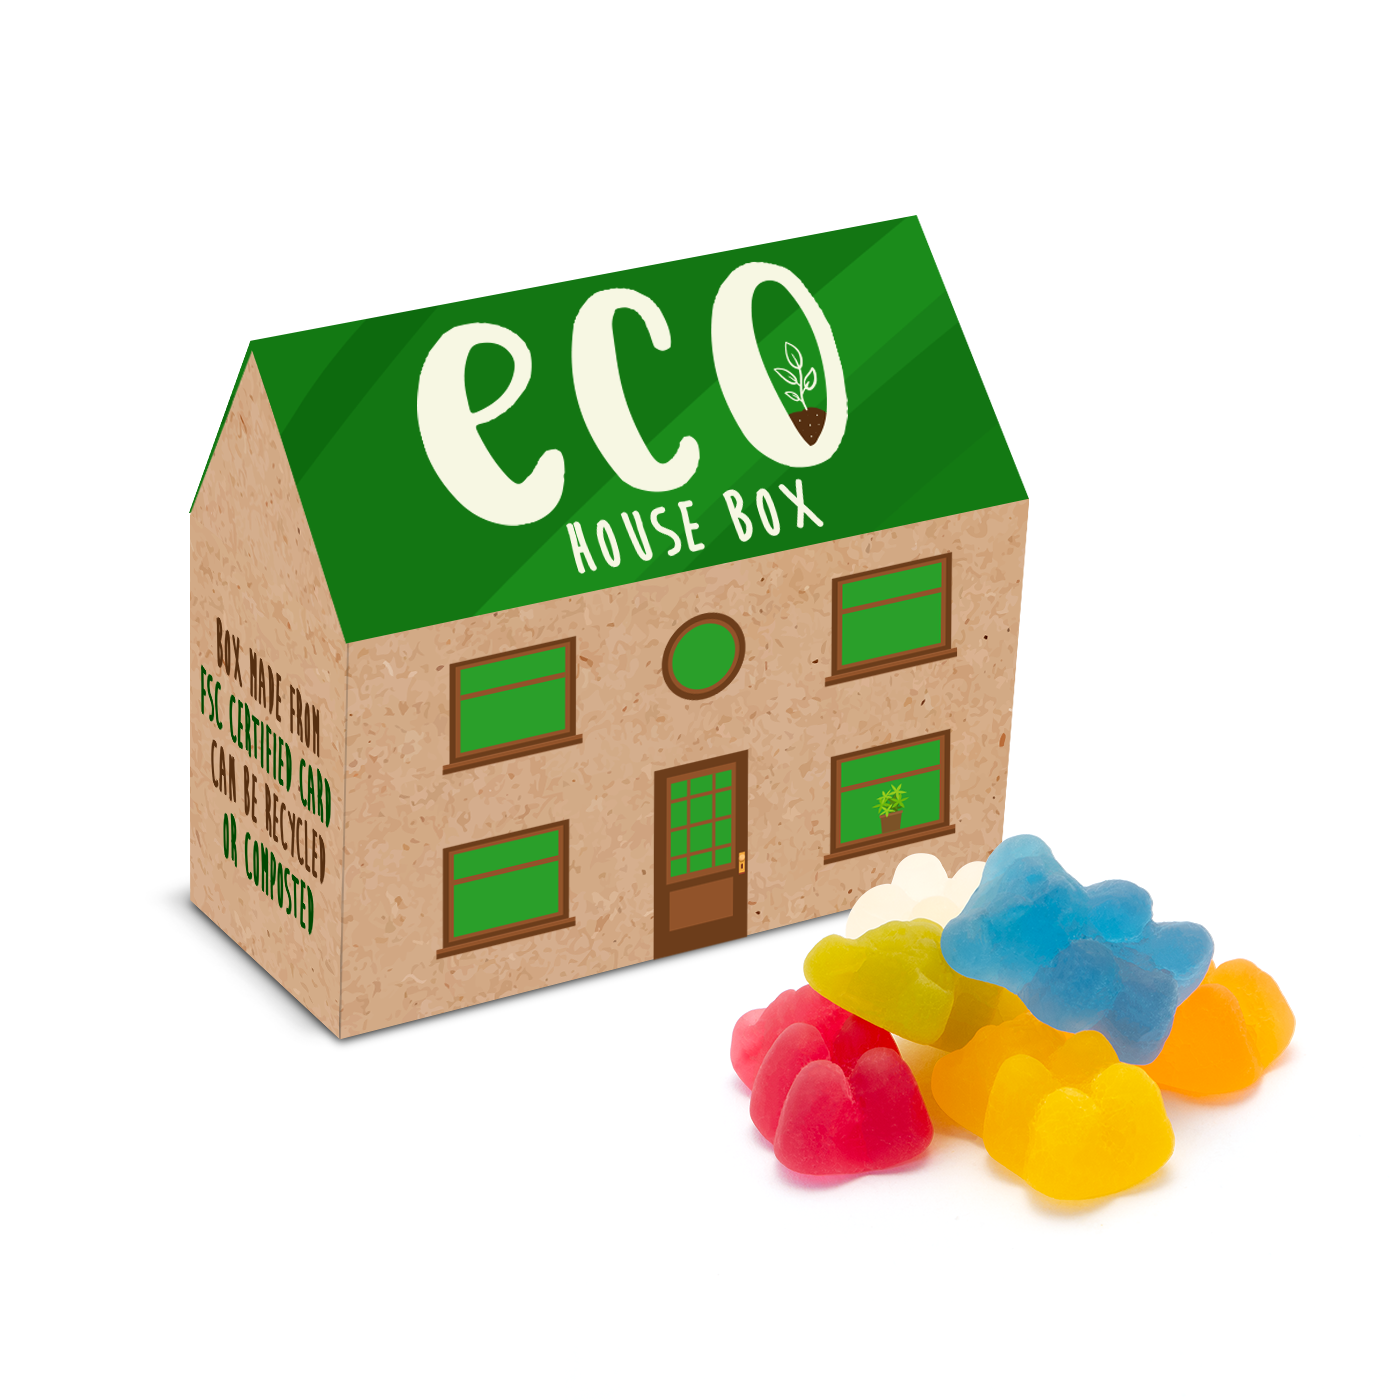 Eco Range - Eco House Box - Vegan Bears